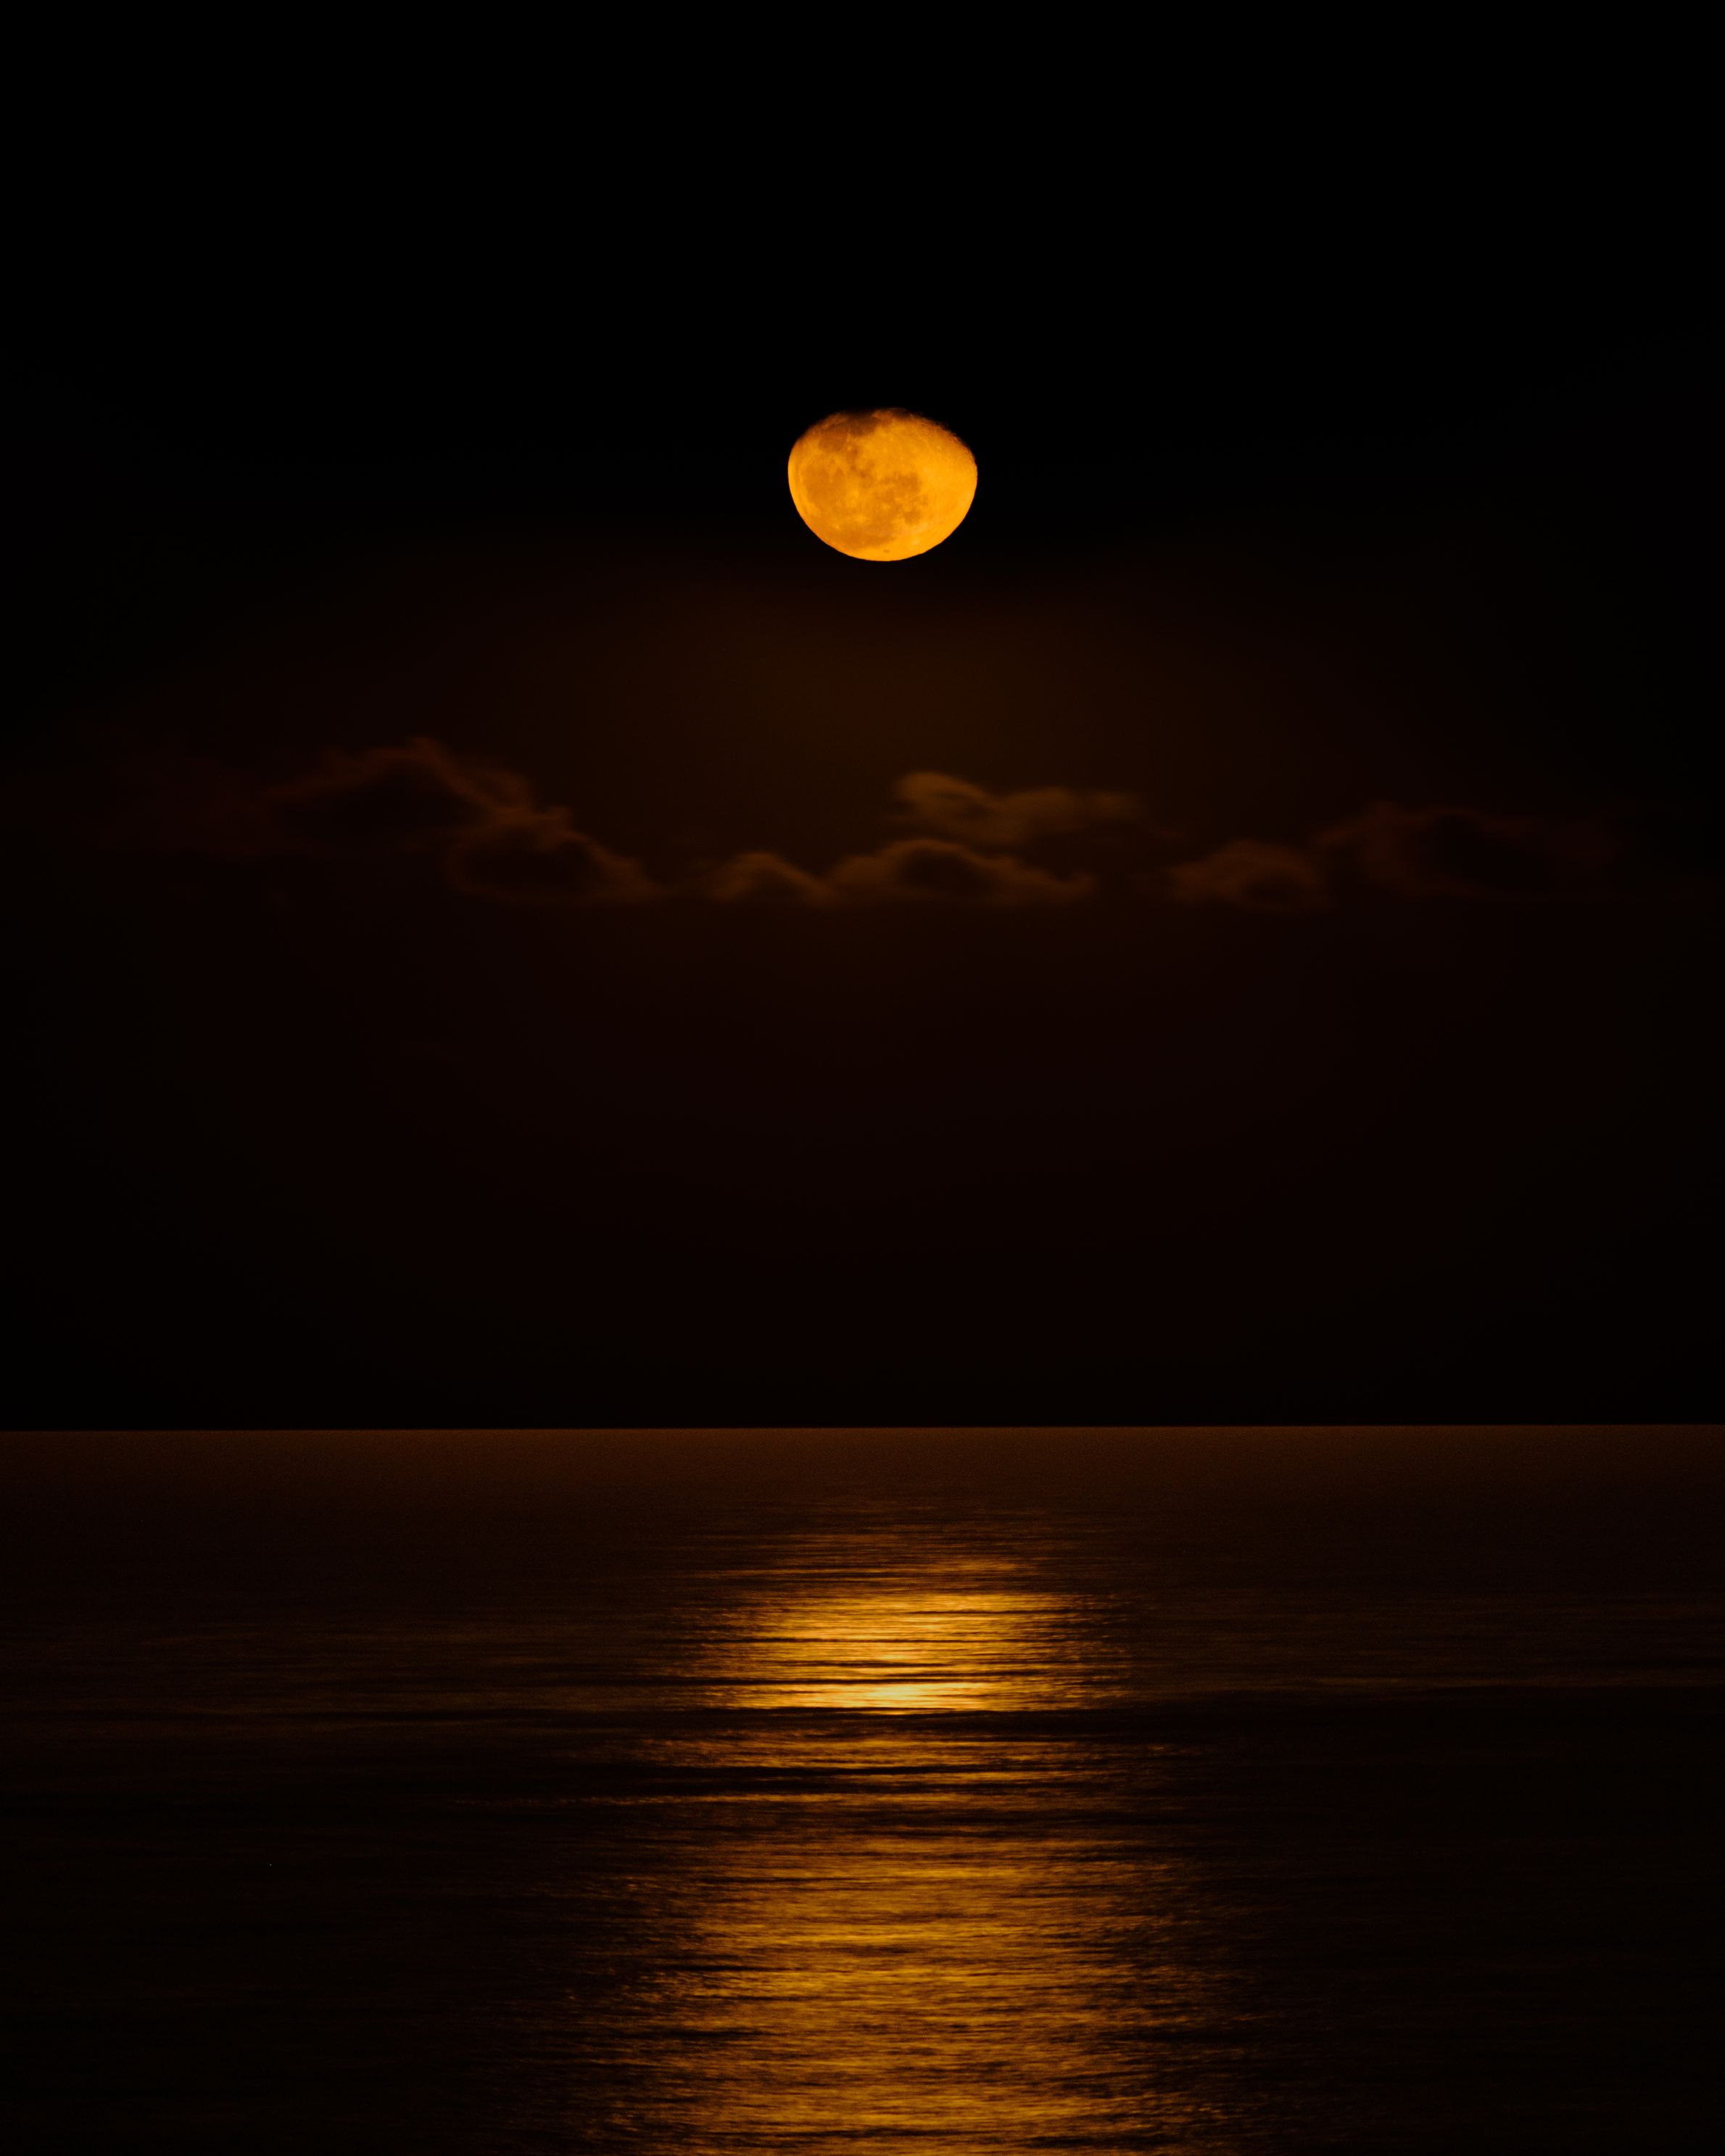 Moon at night over ocean